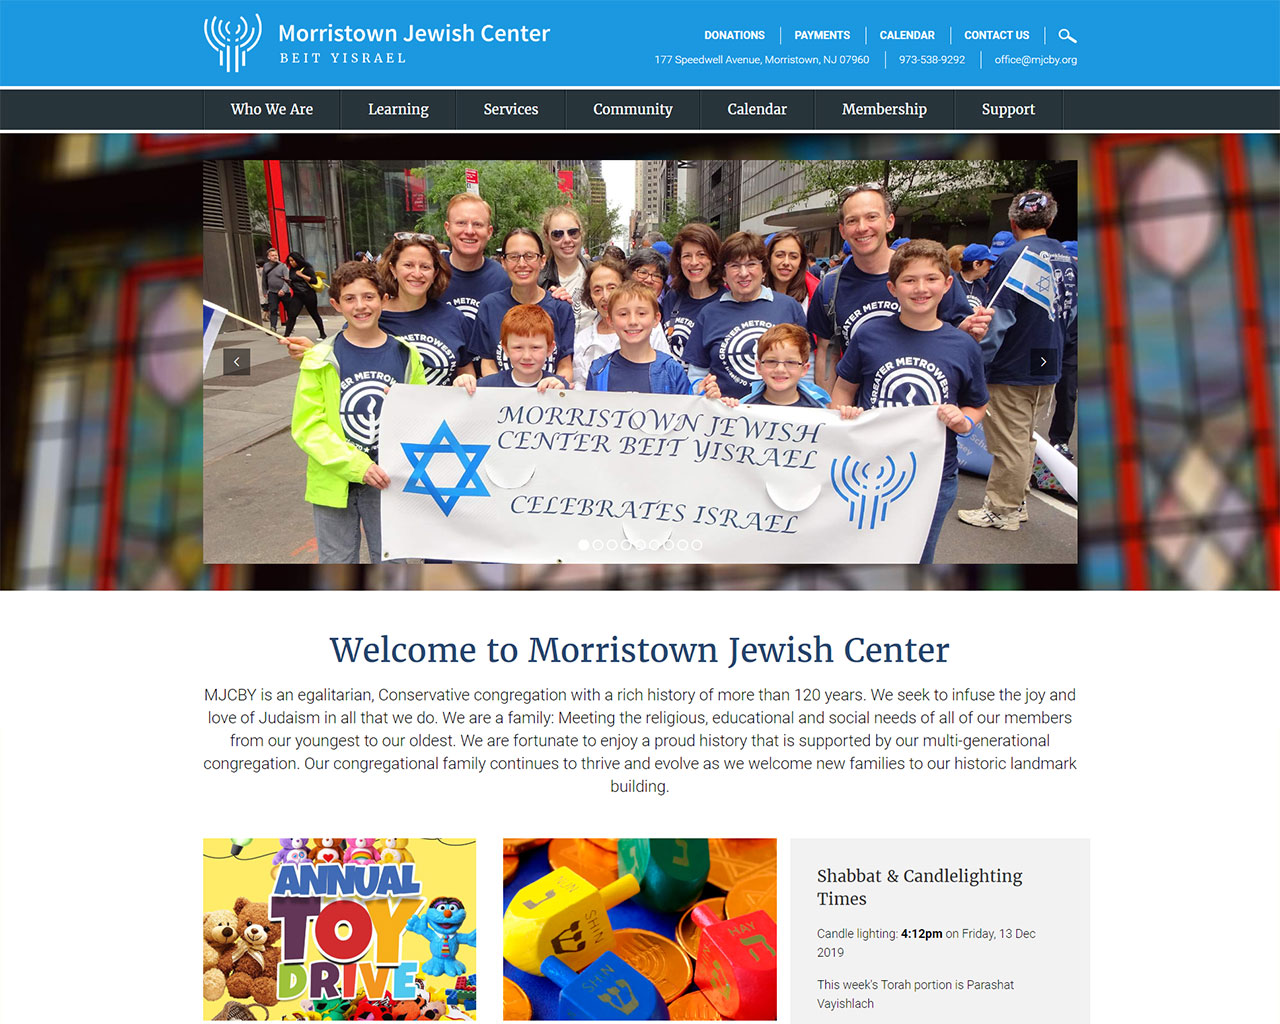 Morristown Jewish Center Beit Yisrael